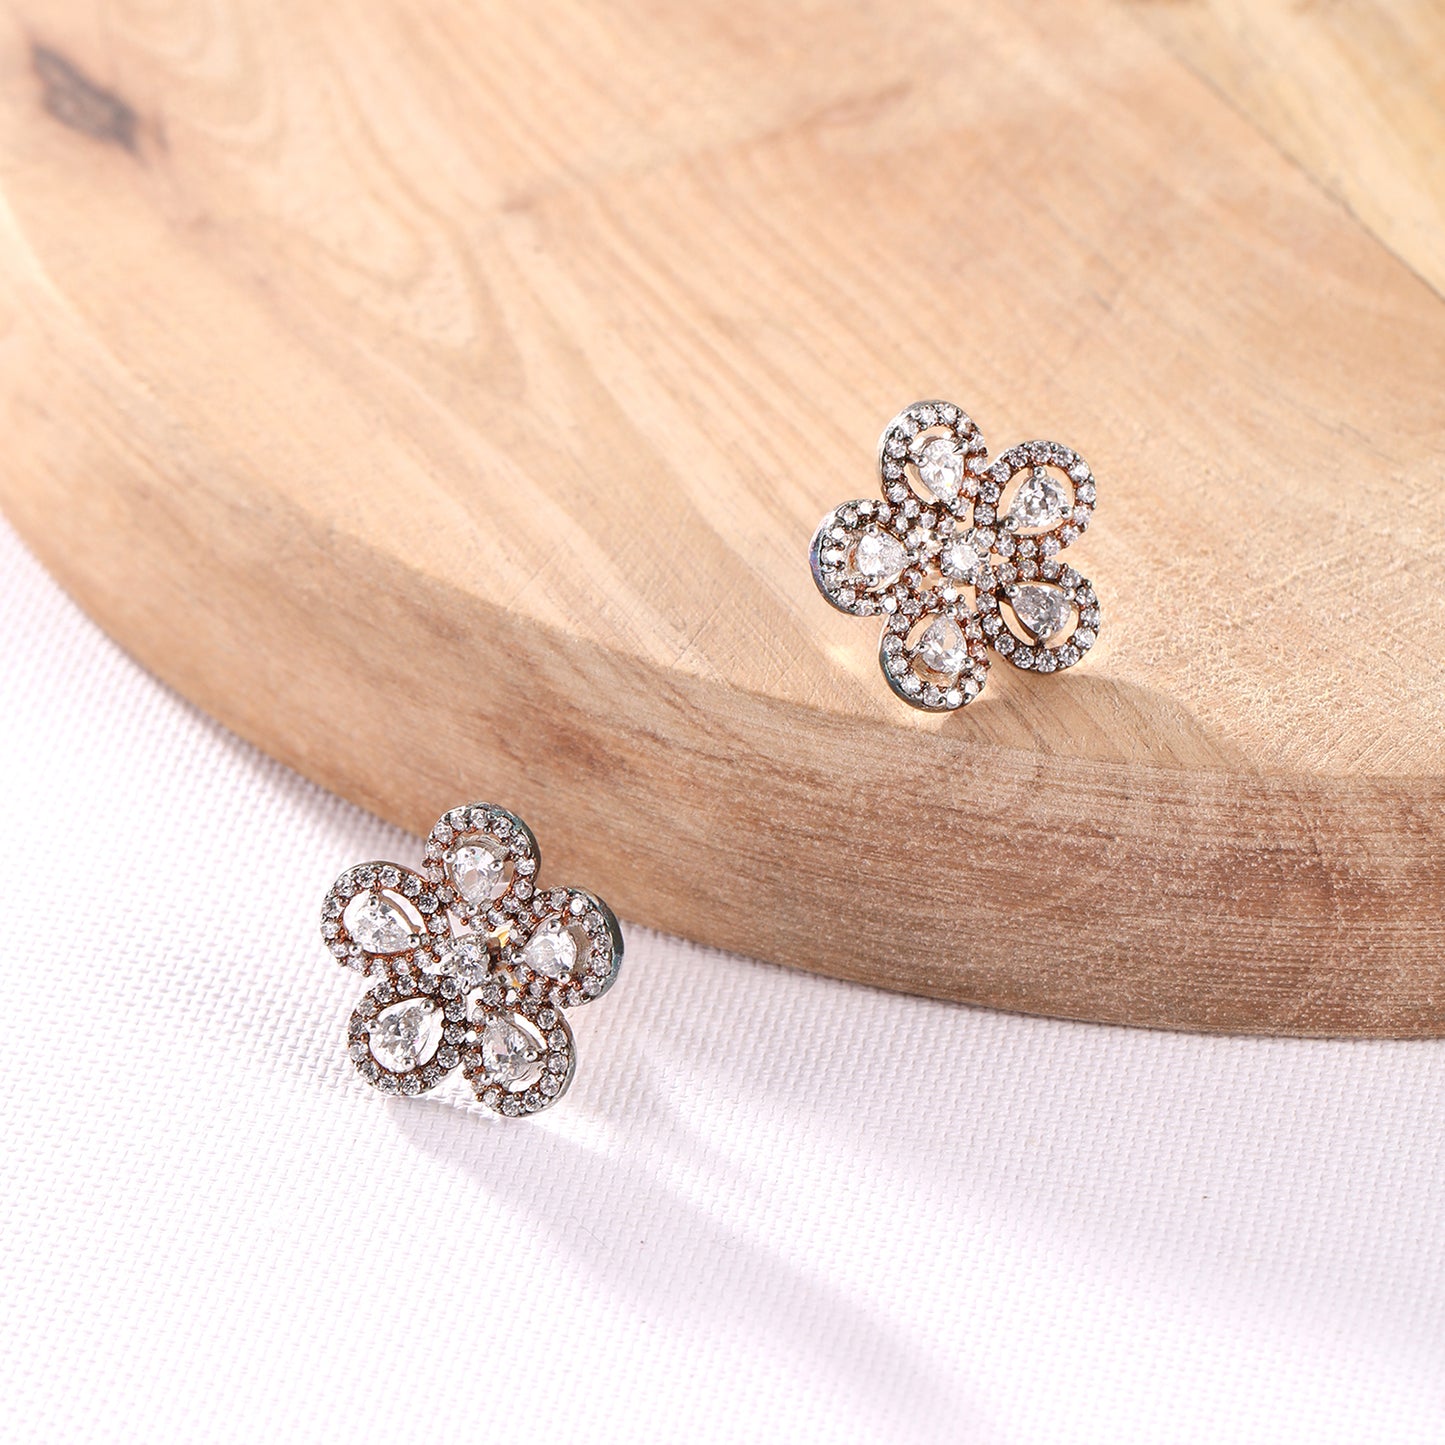 American Diamond Bloomed Flower Stud Earrings